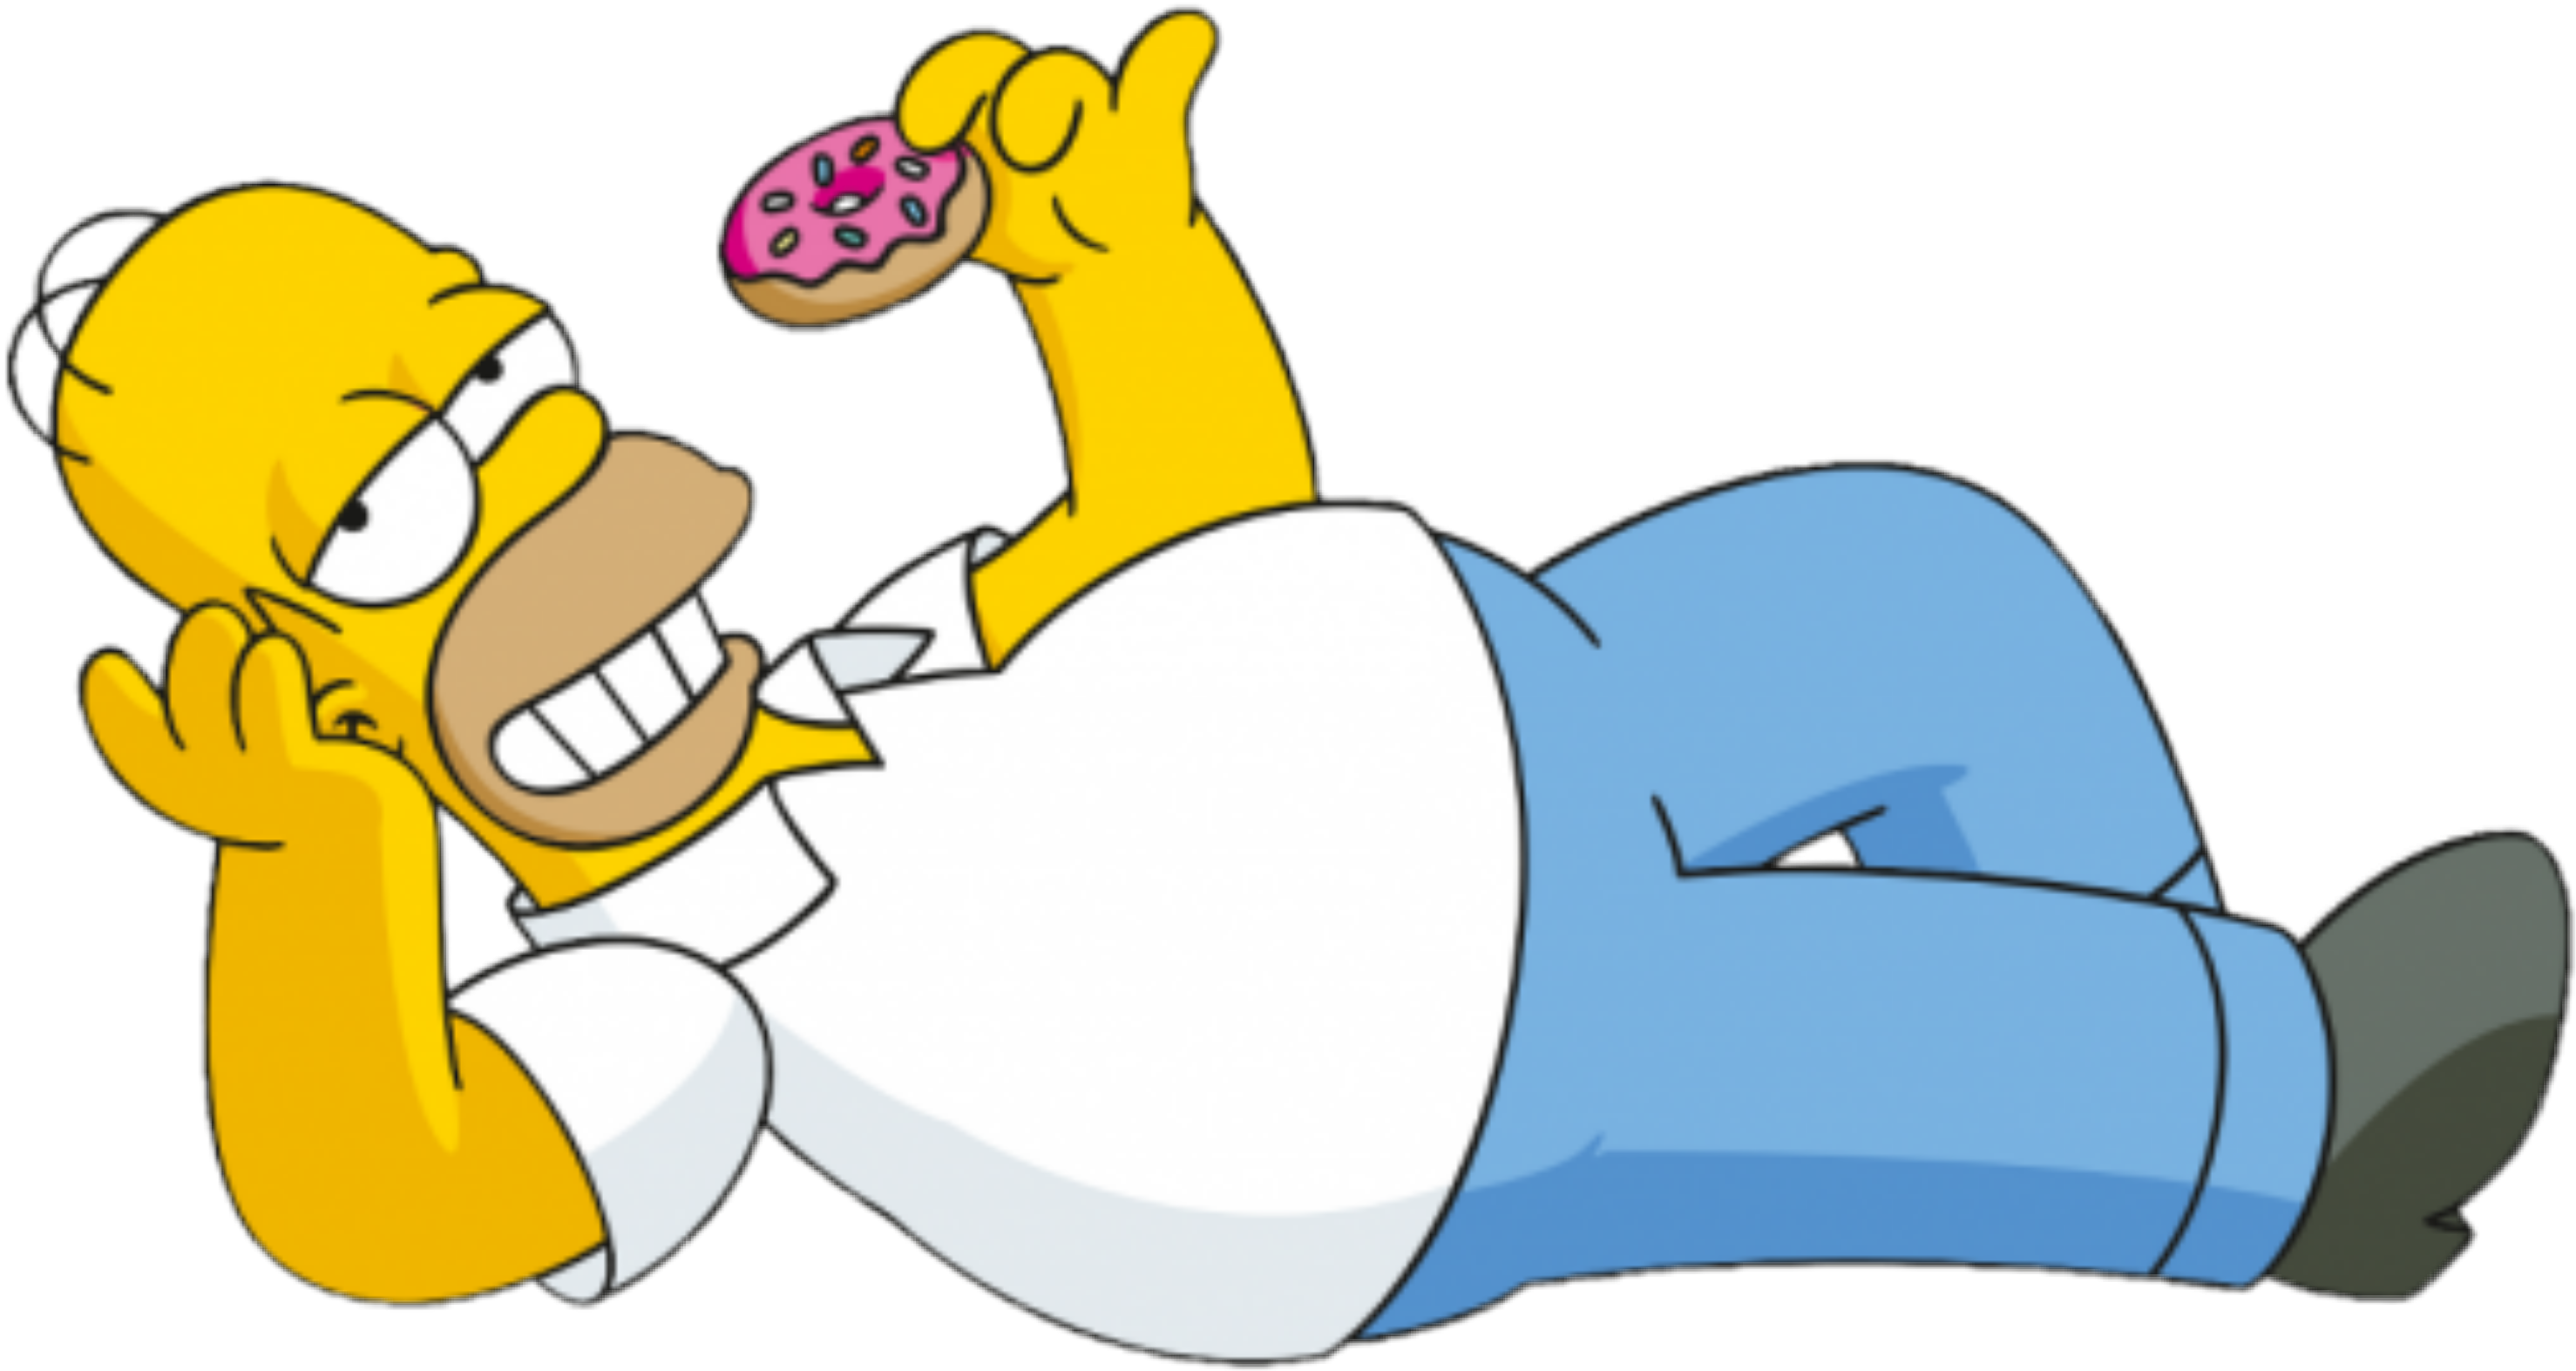 Гомер симпсон с пончиком картинки - картинки, фото и рисунки.